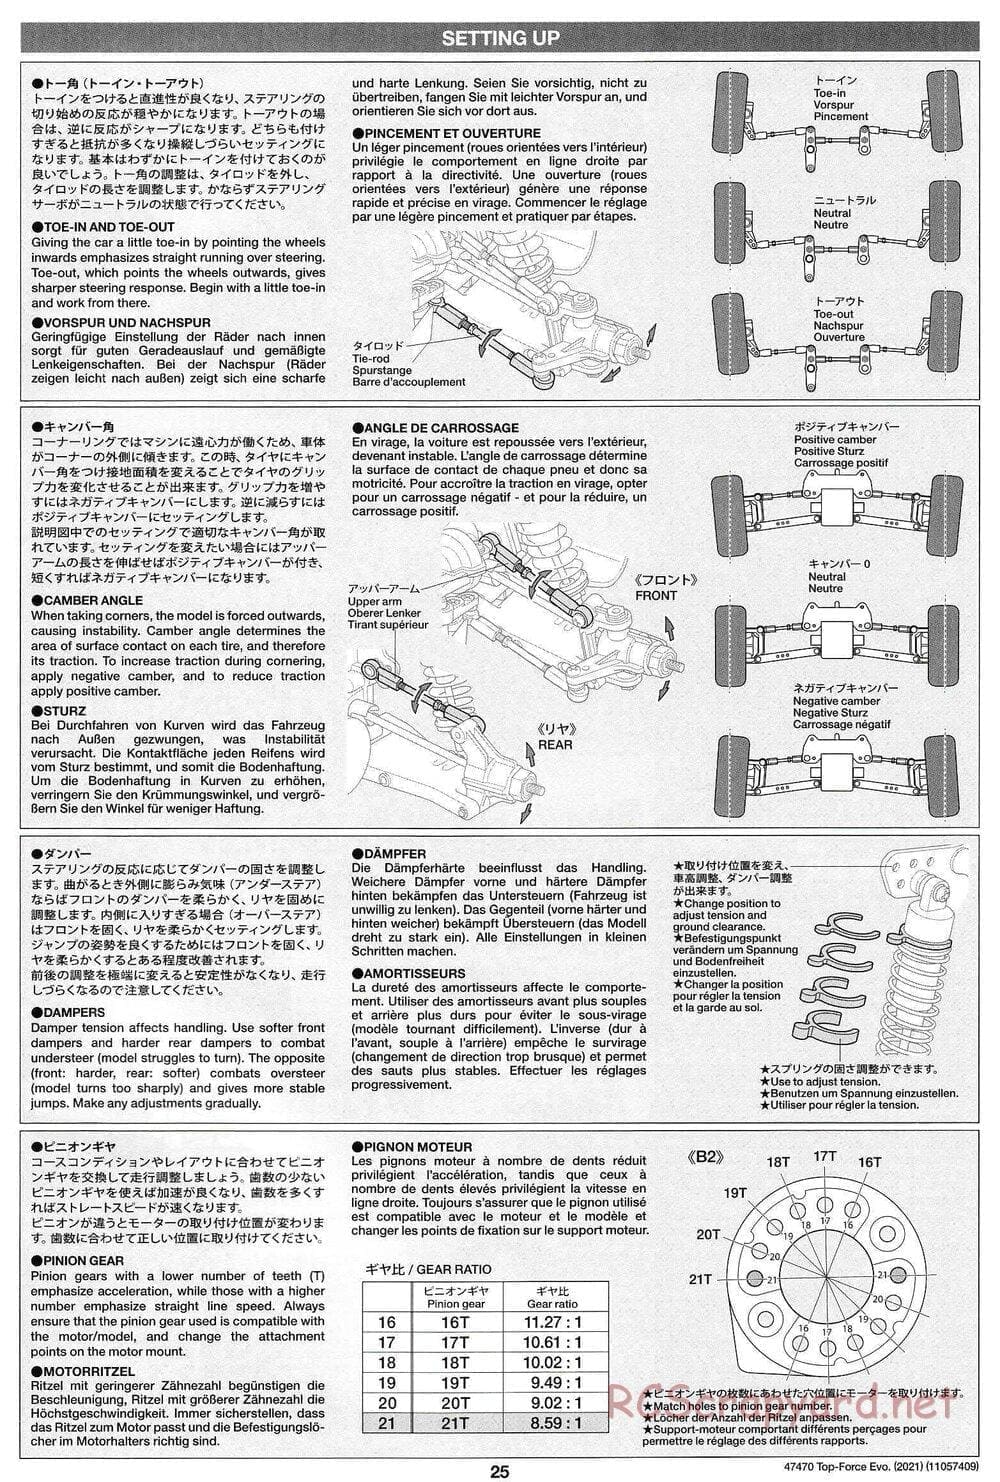 Tamiya - Top Force Evo 2021 - DF-01 Chassis - Manual - Page 25